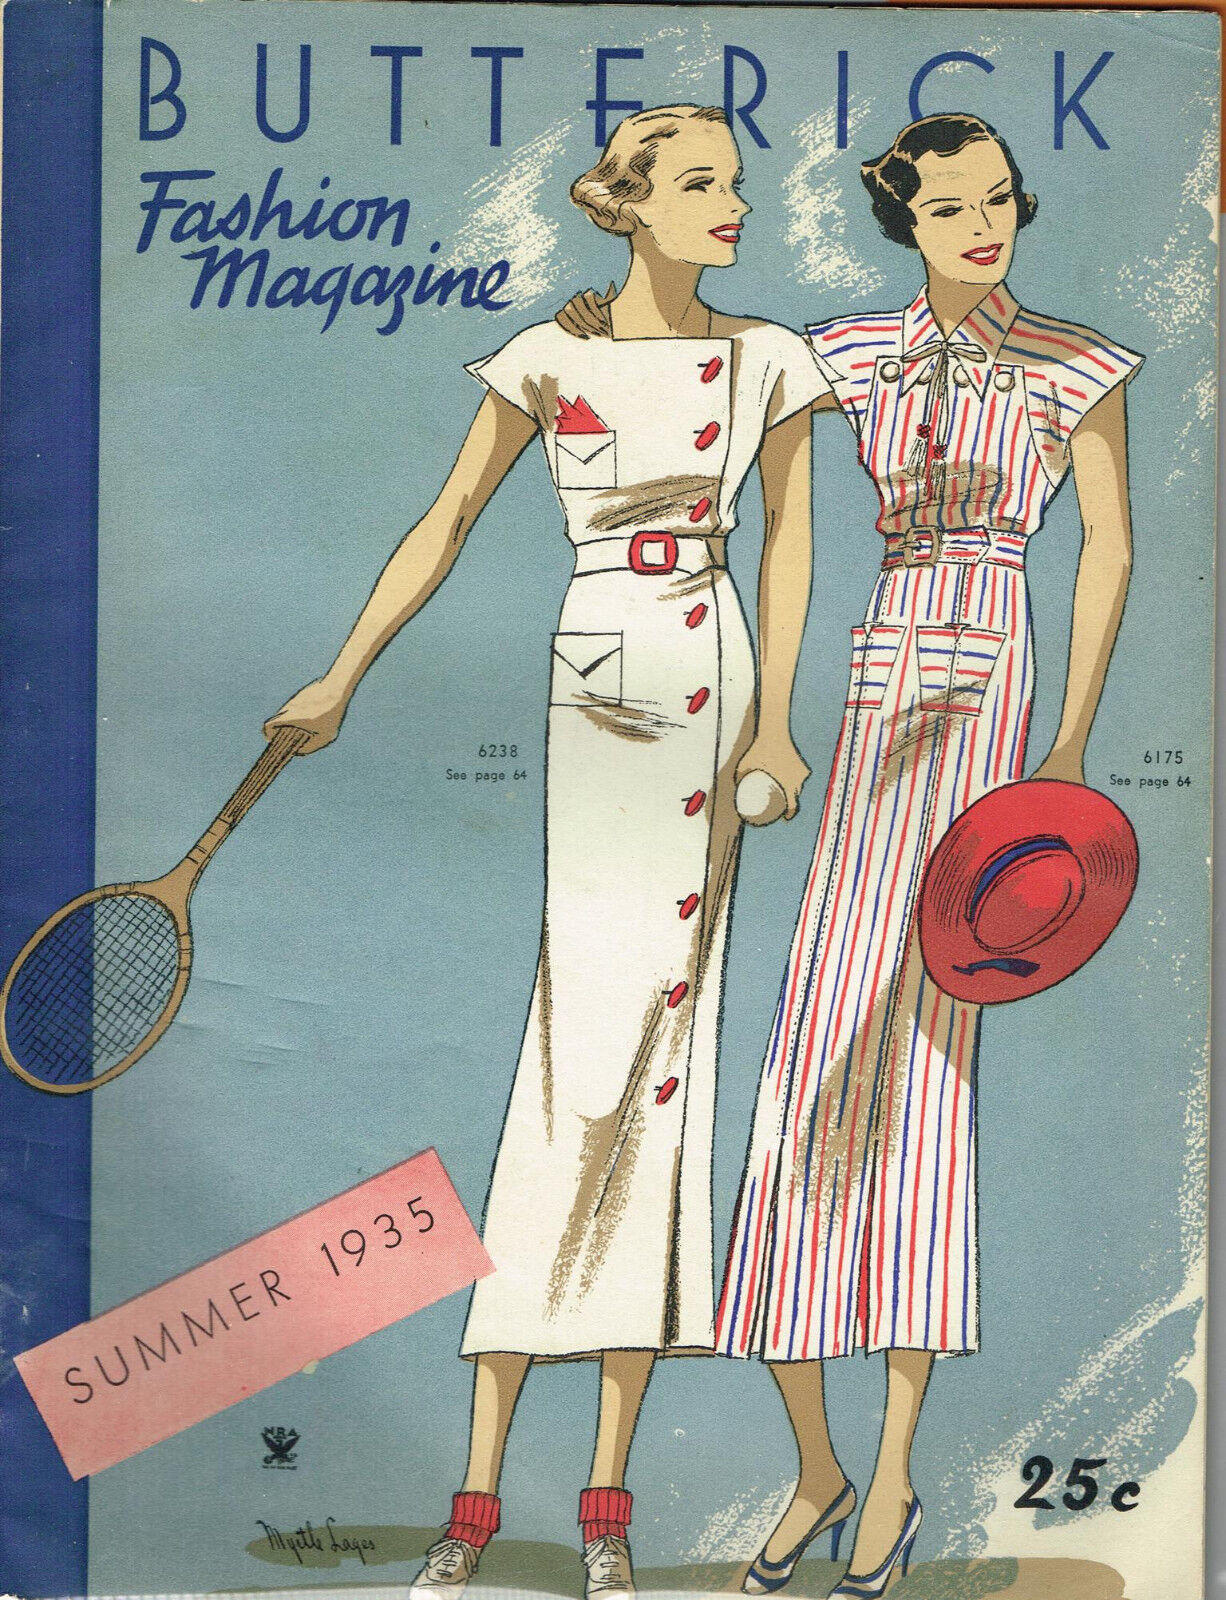 1930s Butterick Summer 1935 Fashion Magazine Pattern Book Catalog E-Book on CD